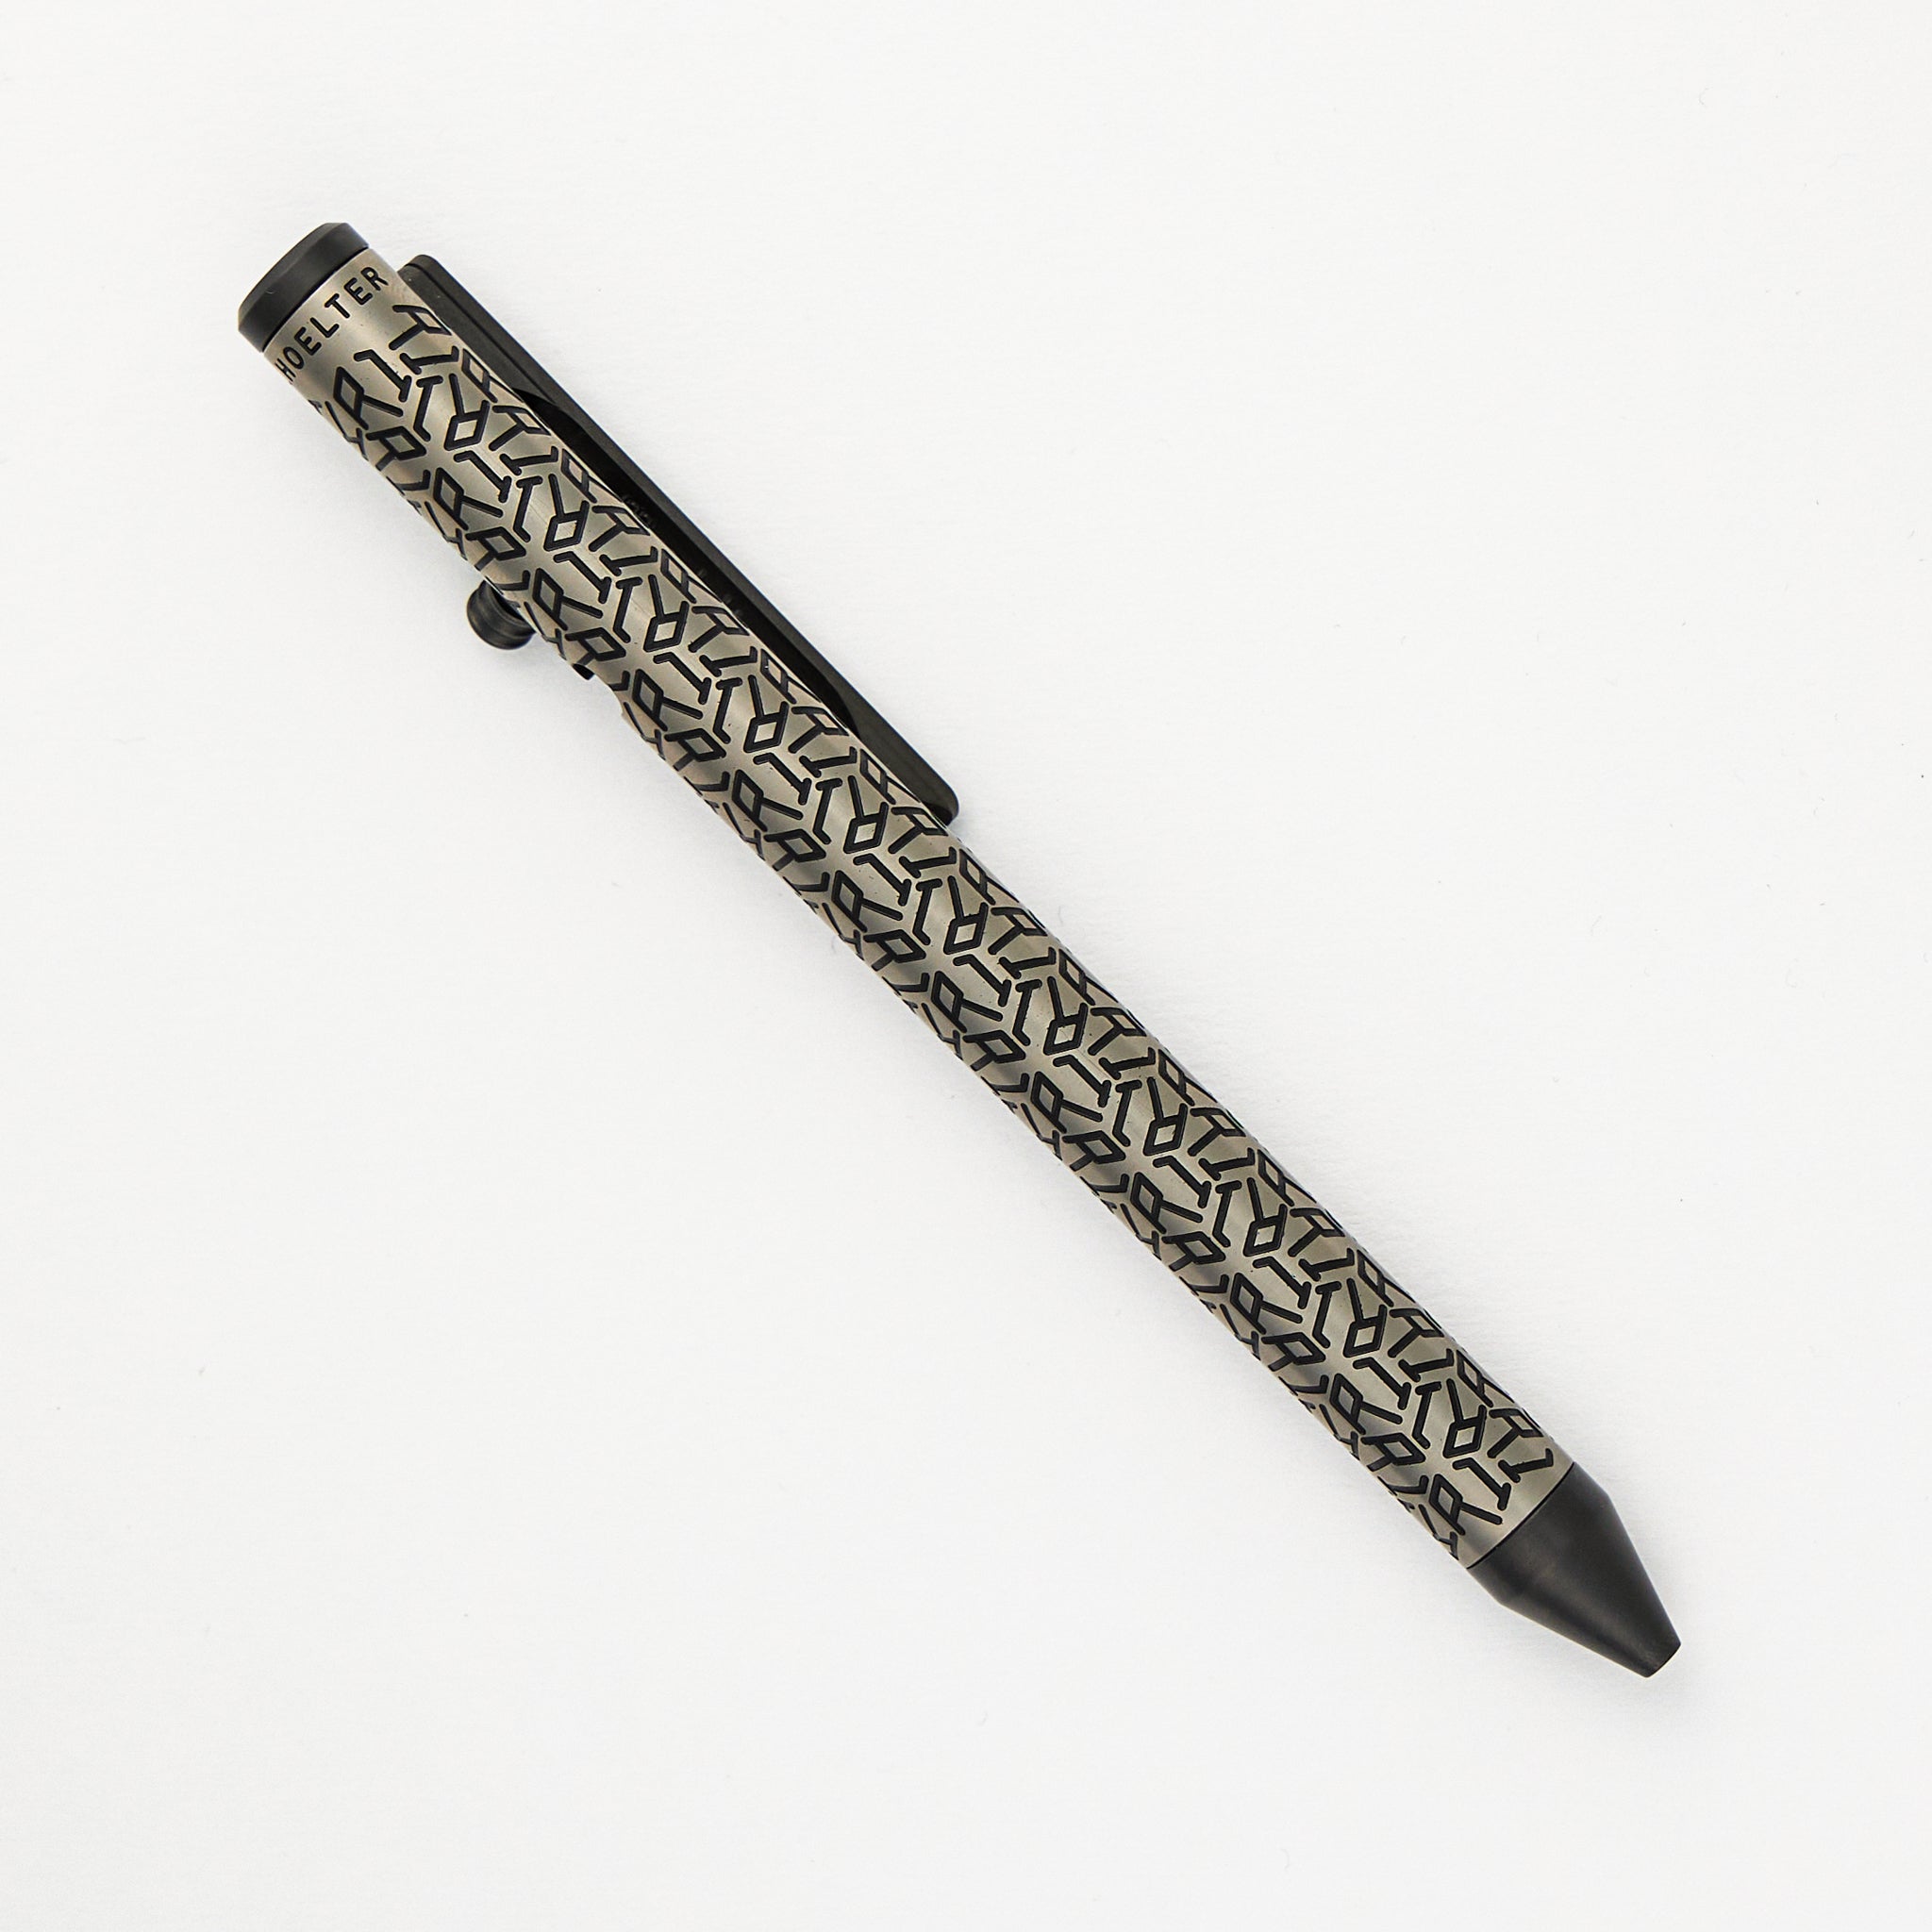 Fellhoelter/Cptn Axel Full Size TiBolt Pen – Titanium/Zirconium “Tuxedo” R1P